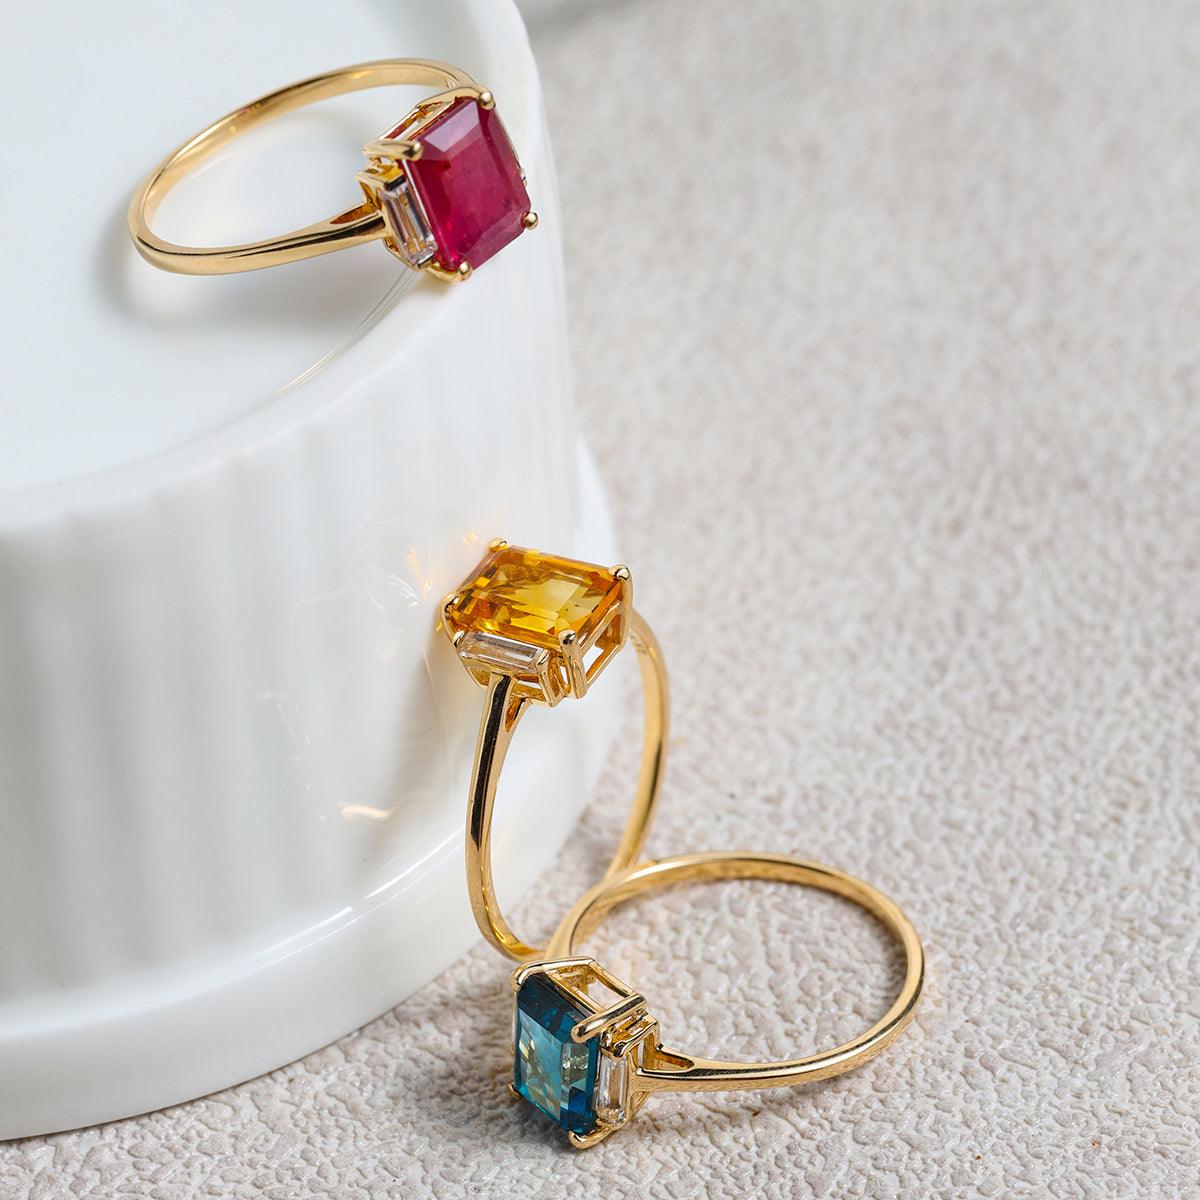 2.07 Ct. Glass Filled Ruby White Topaz Ring 14K Yellow Gold Jewelry - YoTreasure